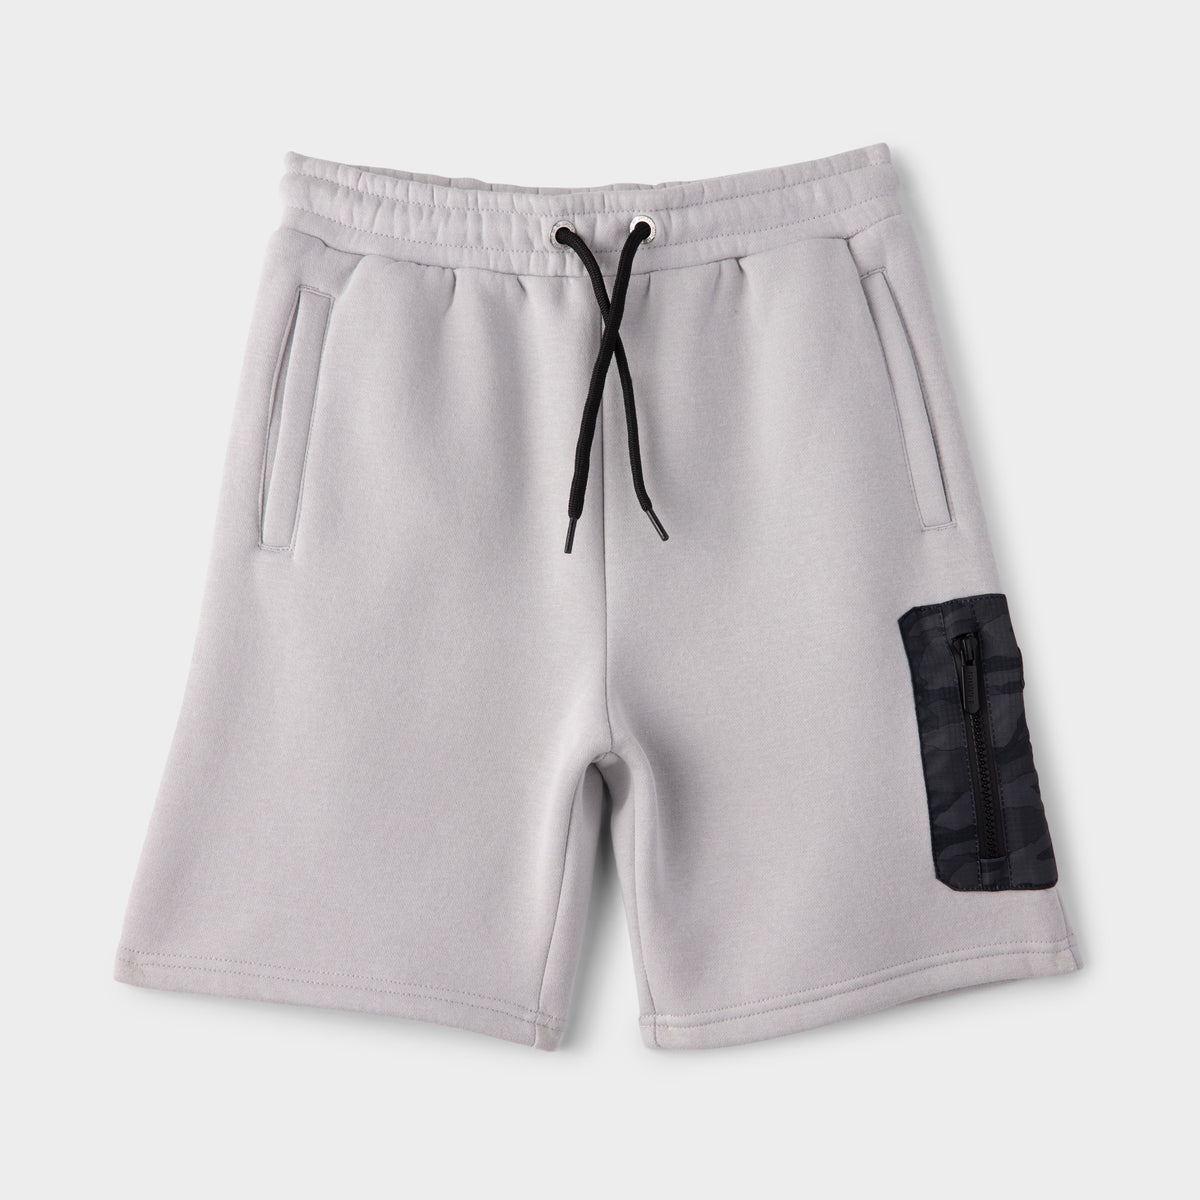 Gillz Pro Series 9 Shorts - XL - Glacier Gray